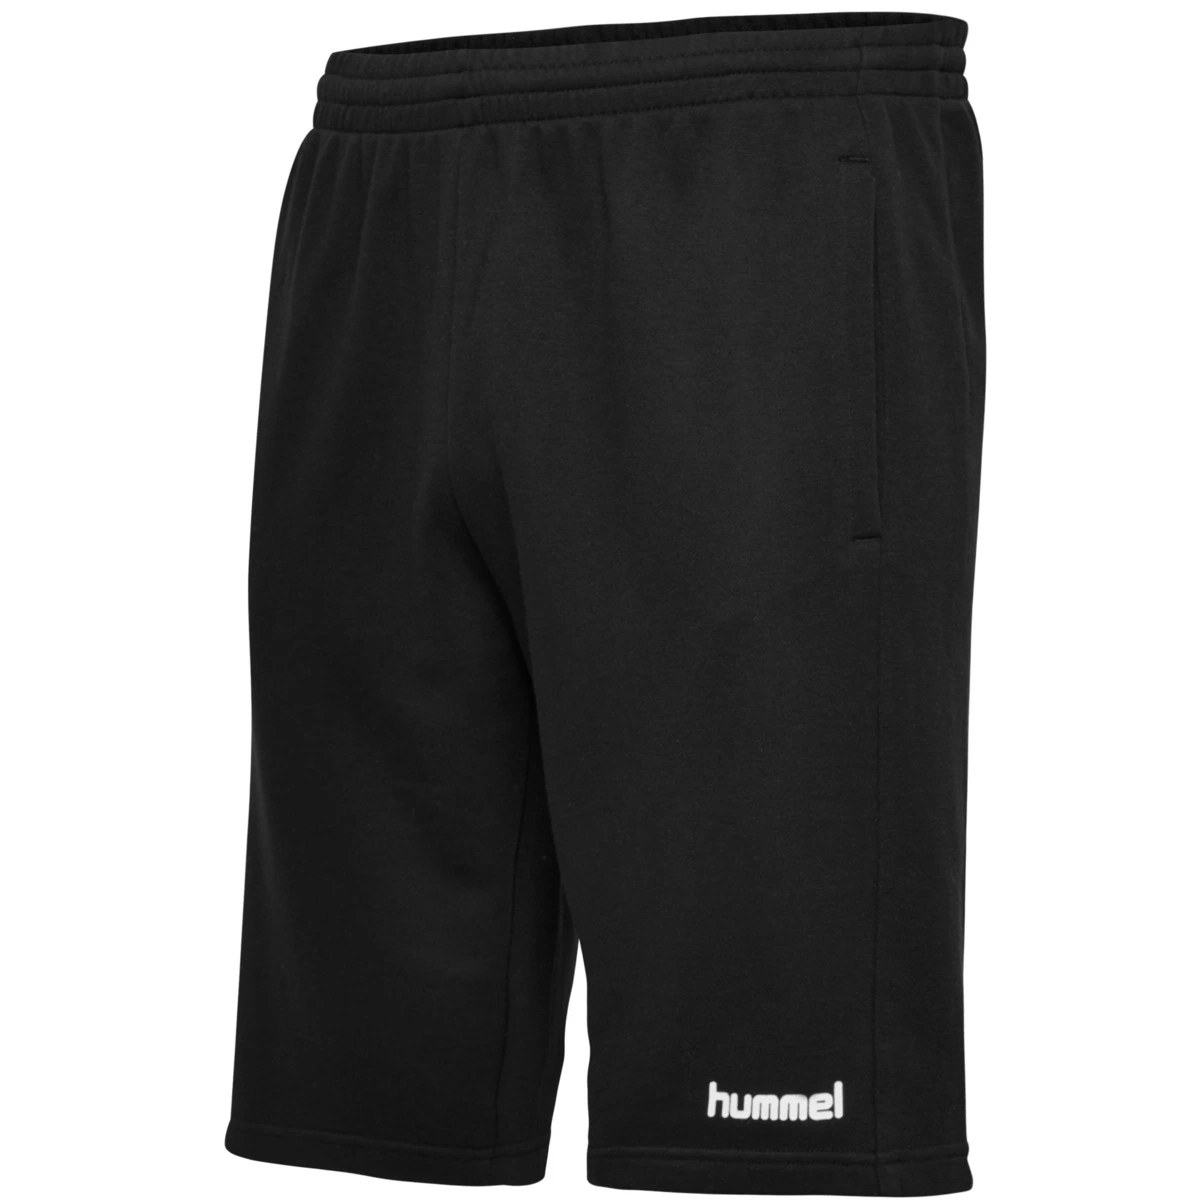 HUMMEL Fussball___Teamsport_Textil___Shorts_Cotton_Bermuda_Short 203533 2001 BLACK